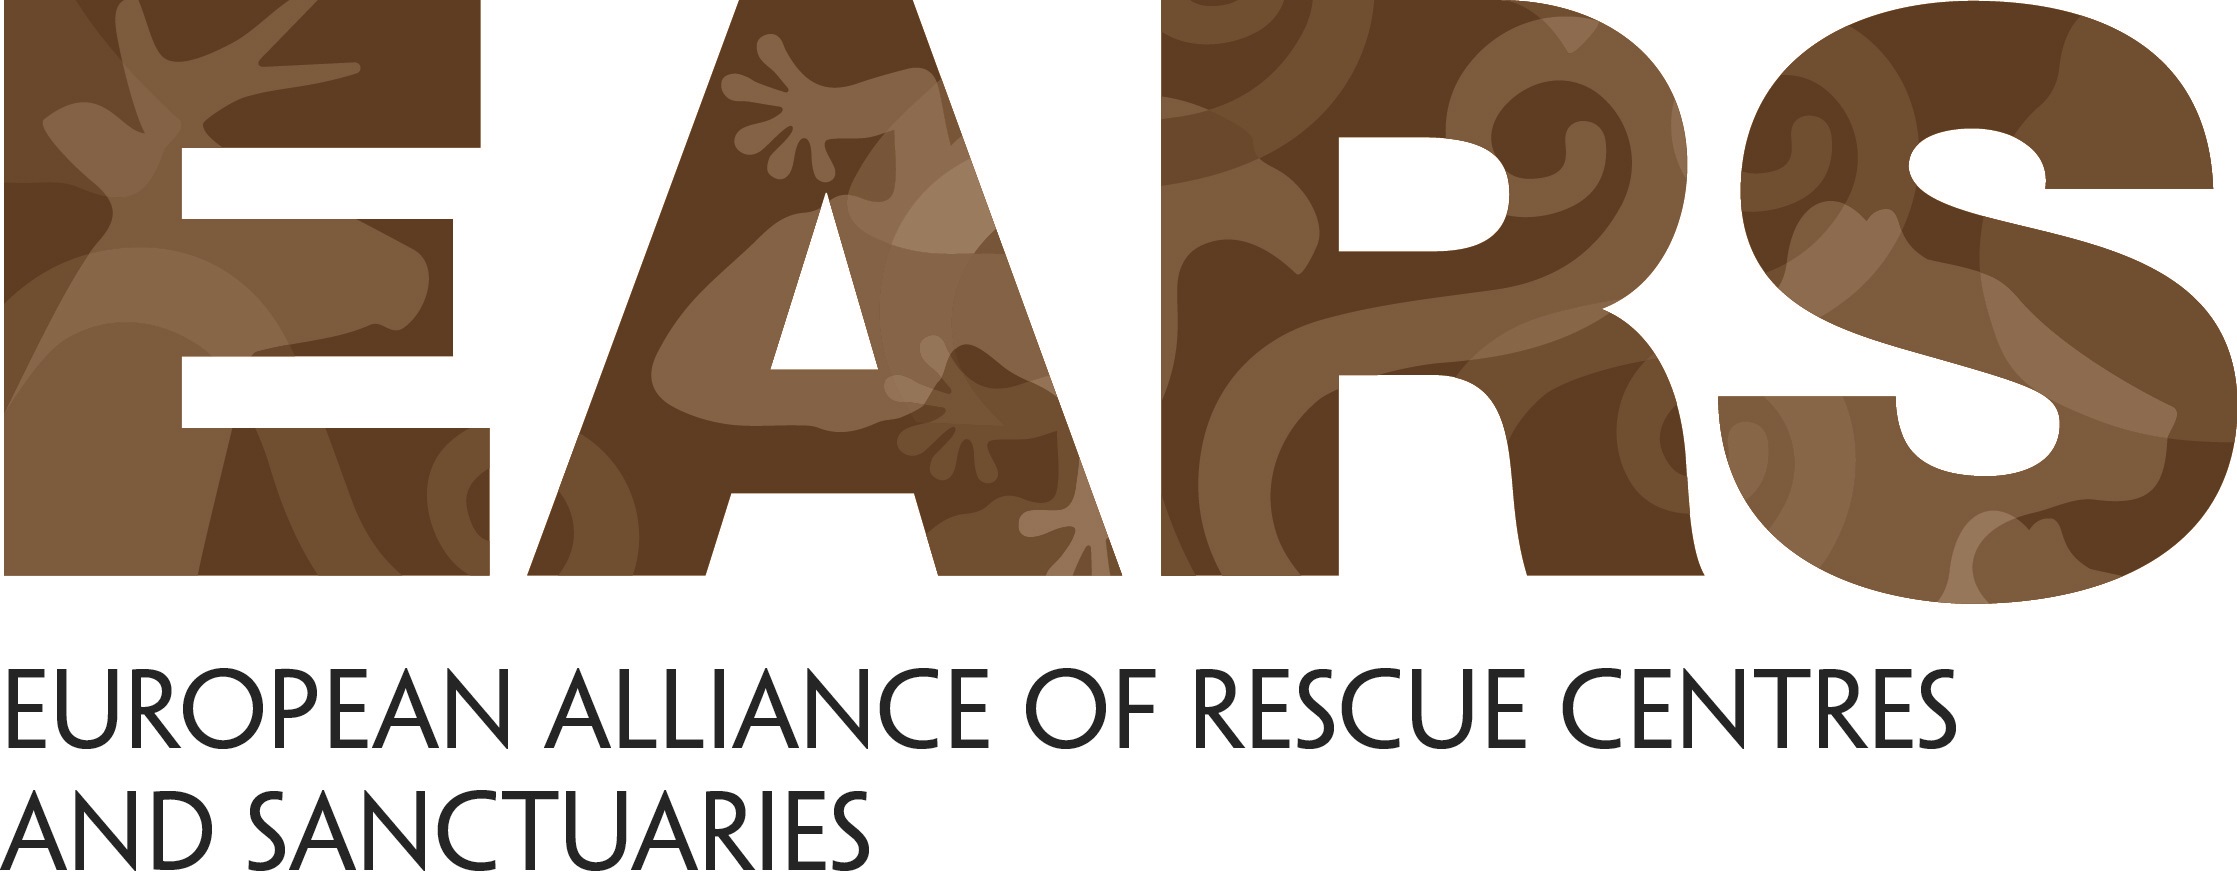 European Alliance of Rescue centres and Sanctuaries (EARS)